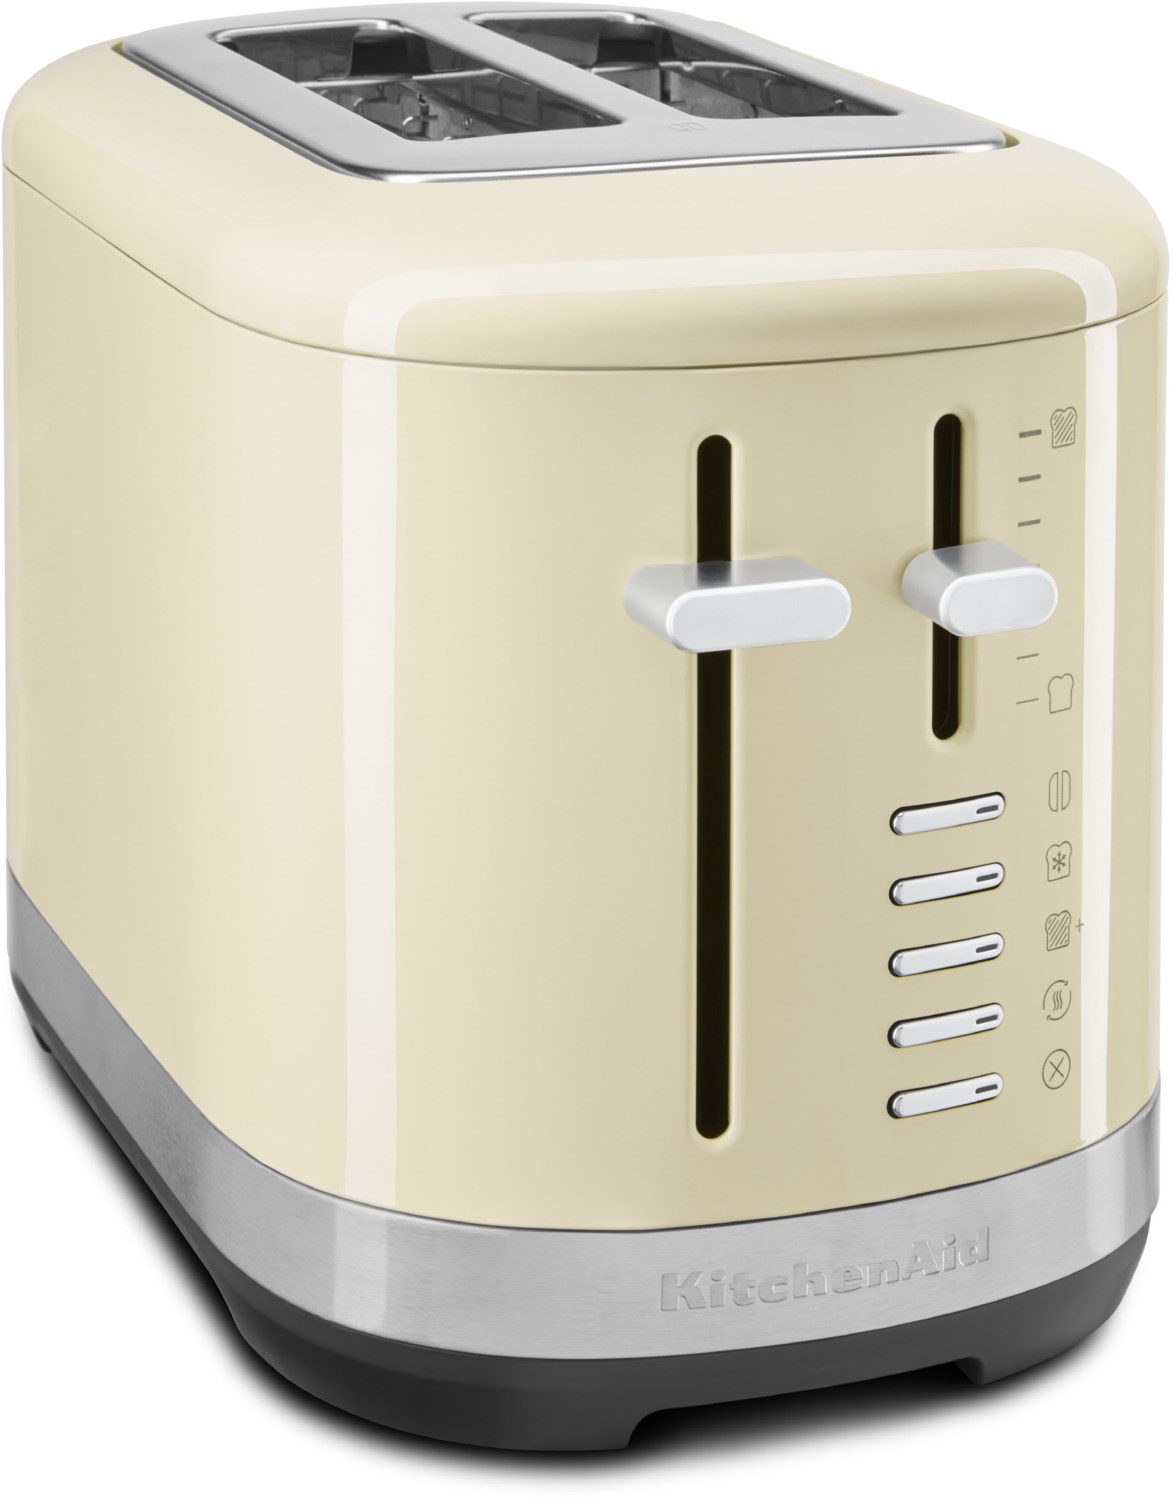 5KMT2109EAC Kompakt-Toaster creme von KitchenAid